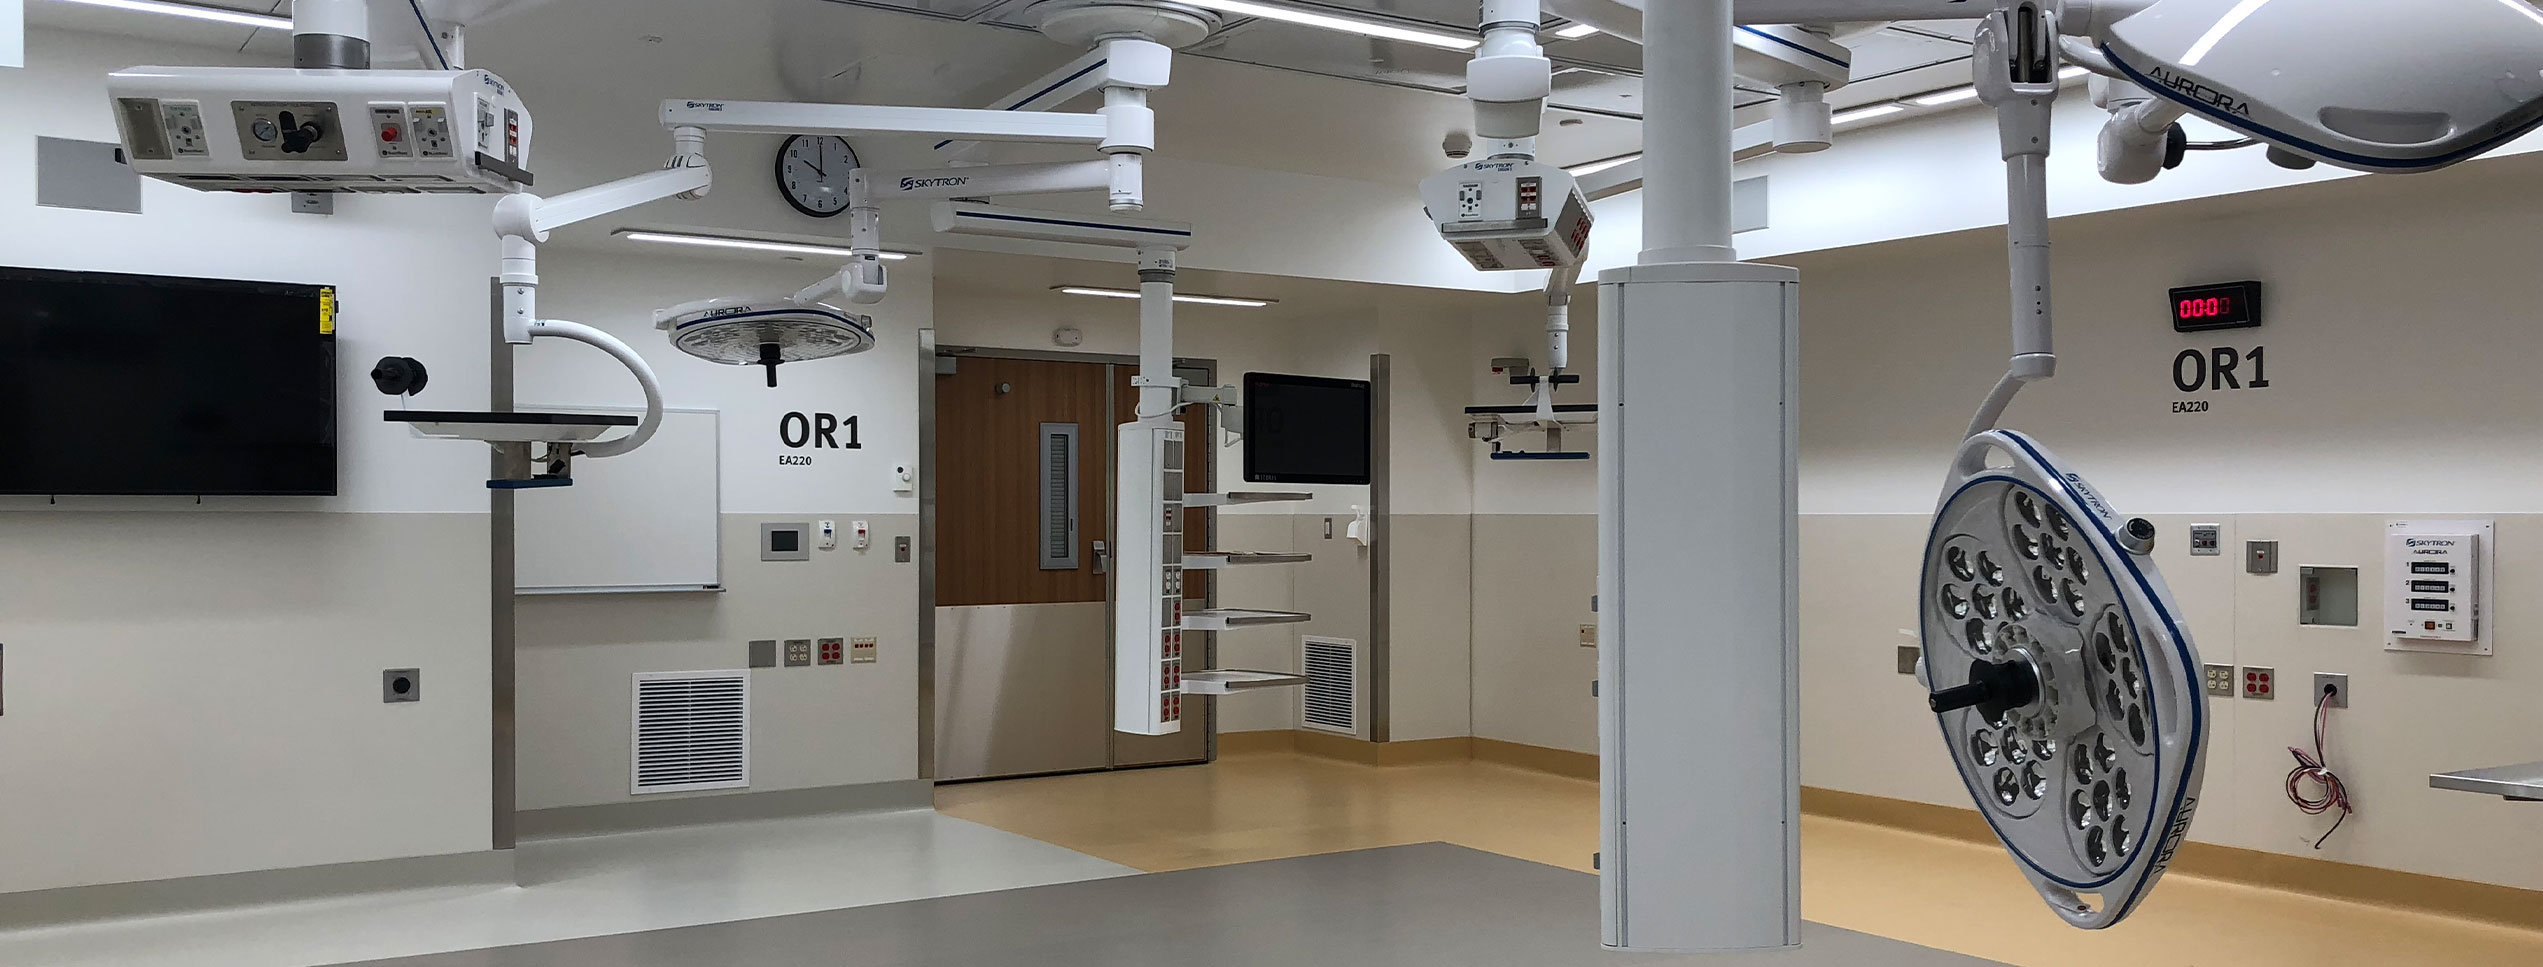 UW Medical Center operating room